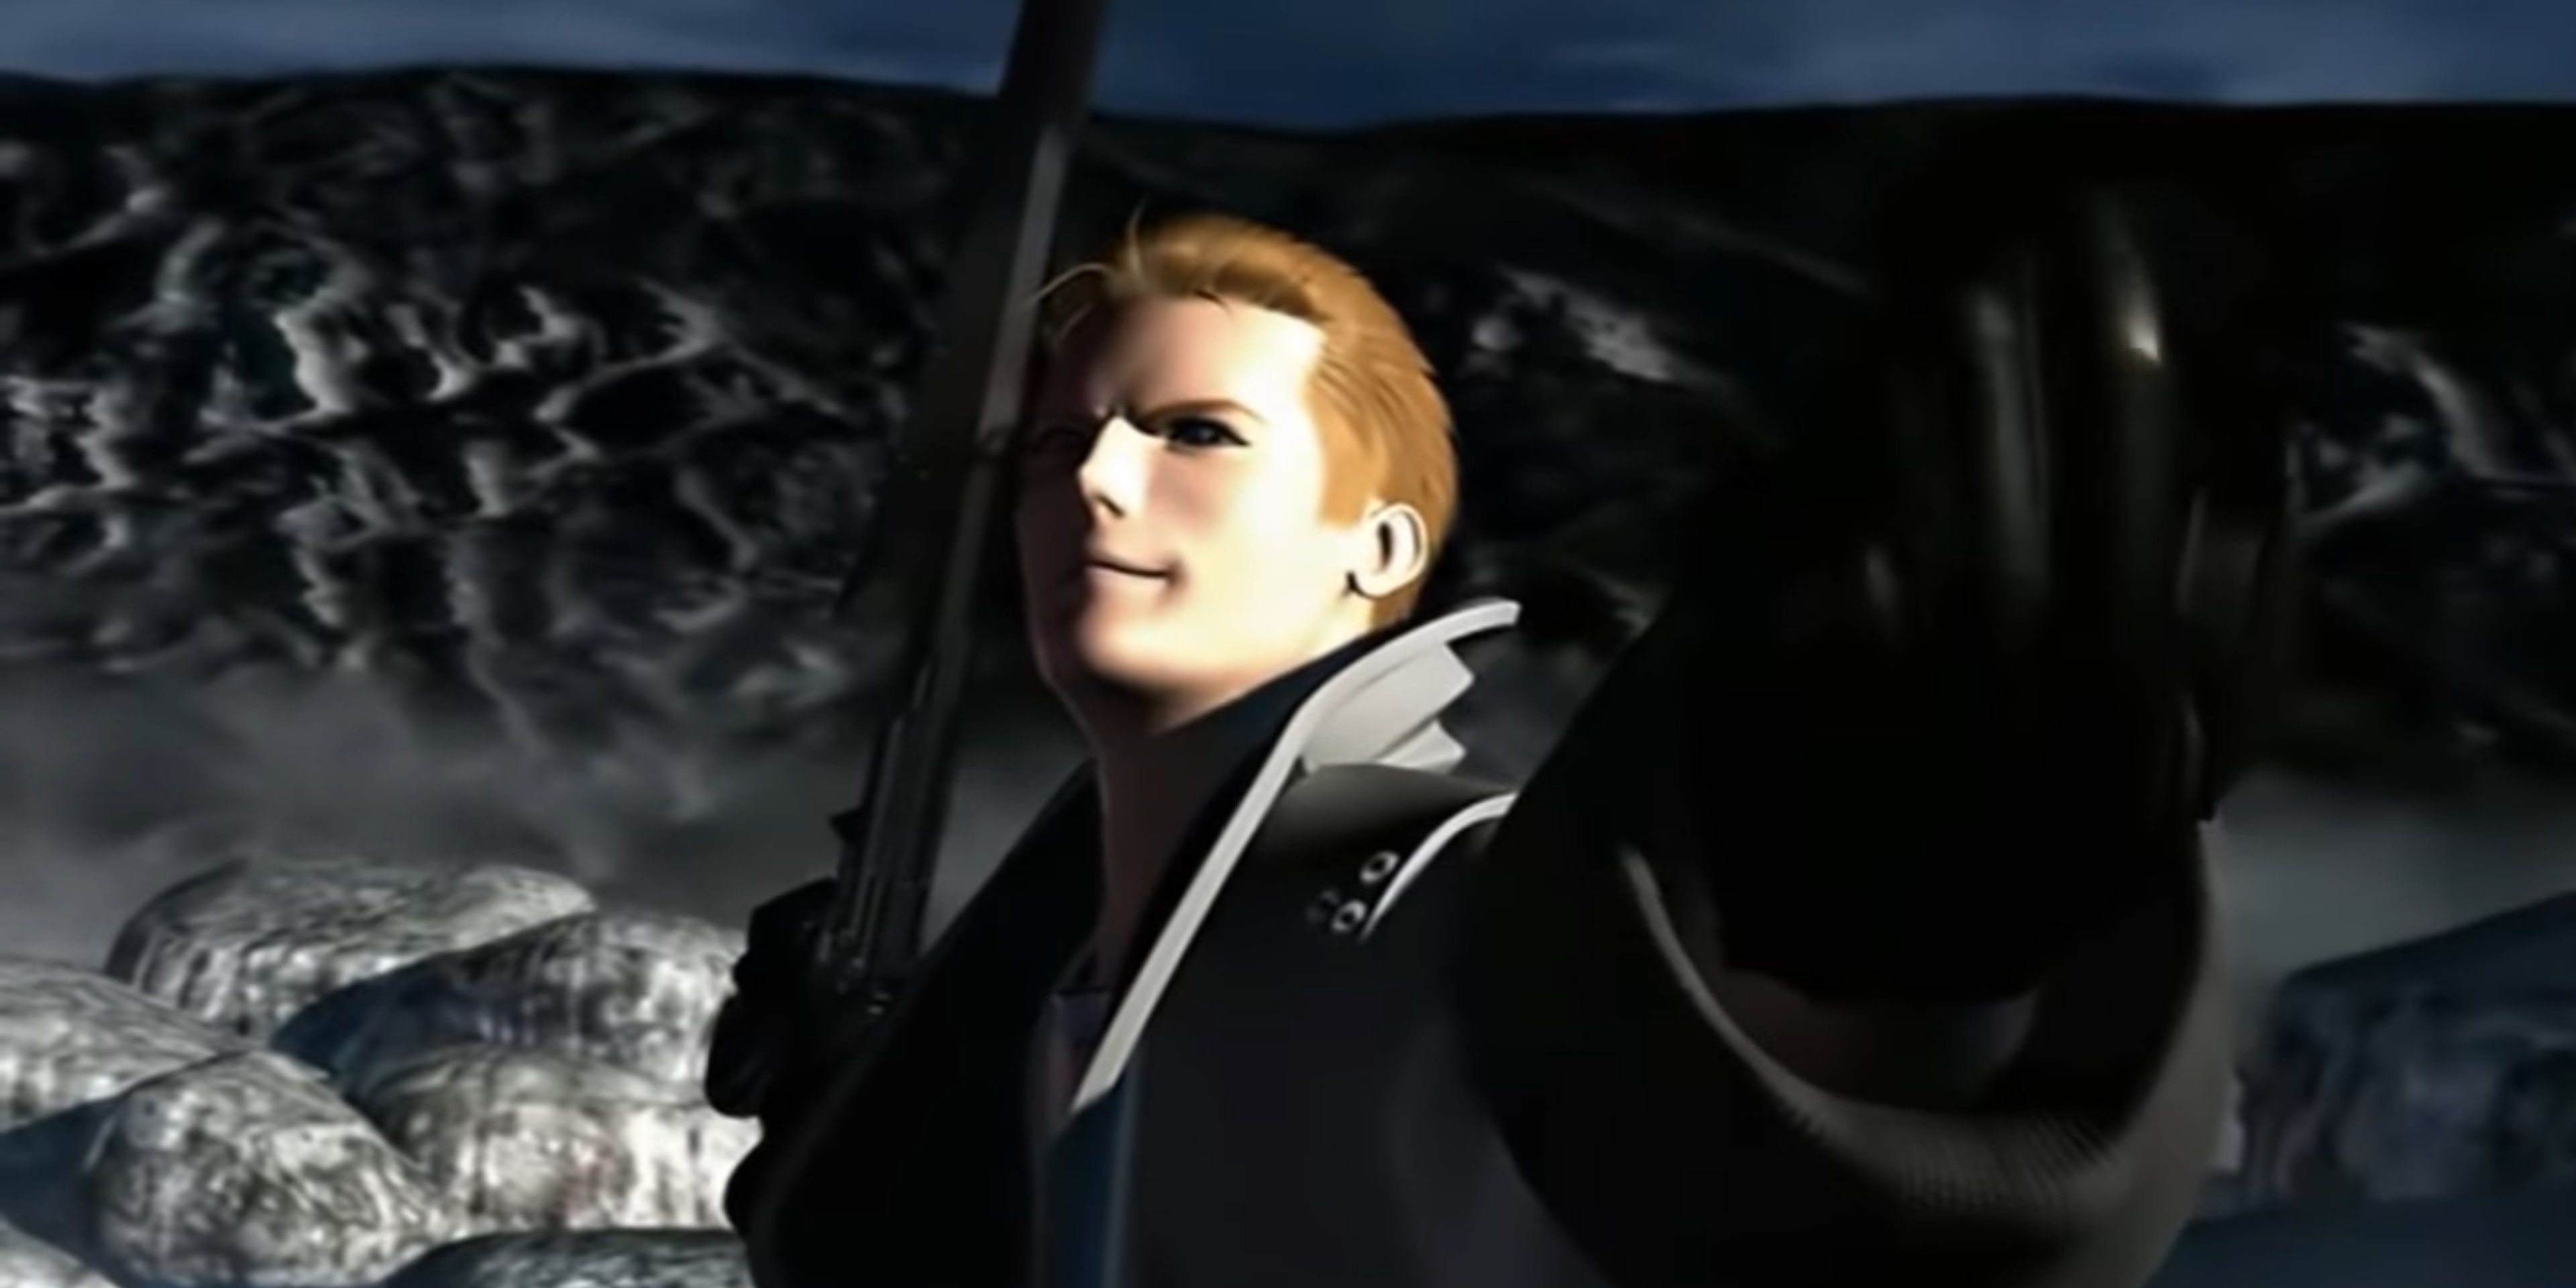 Seifer Almasy Fighting Squall Leonhart in a cutscene in Final Fantasy VIII